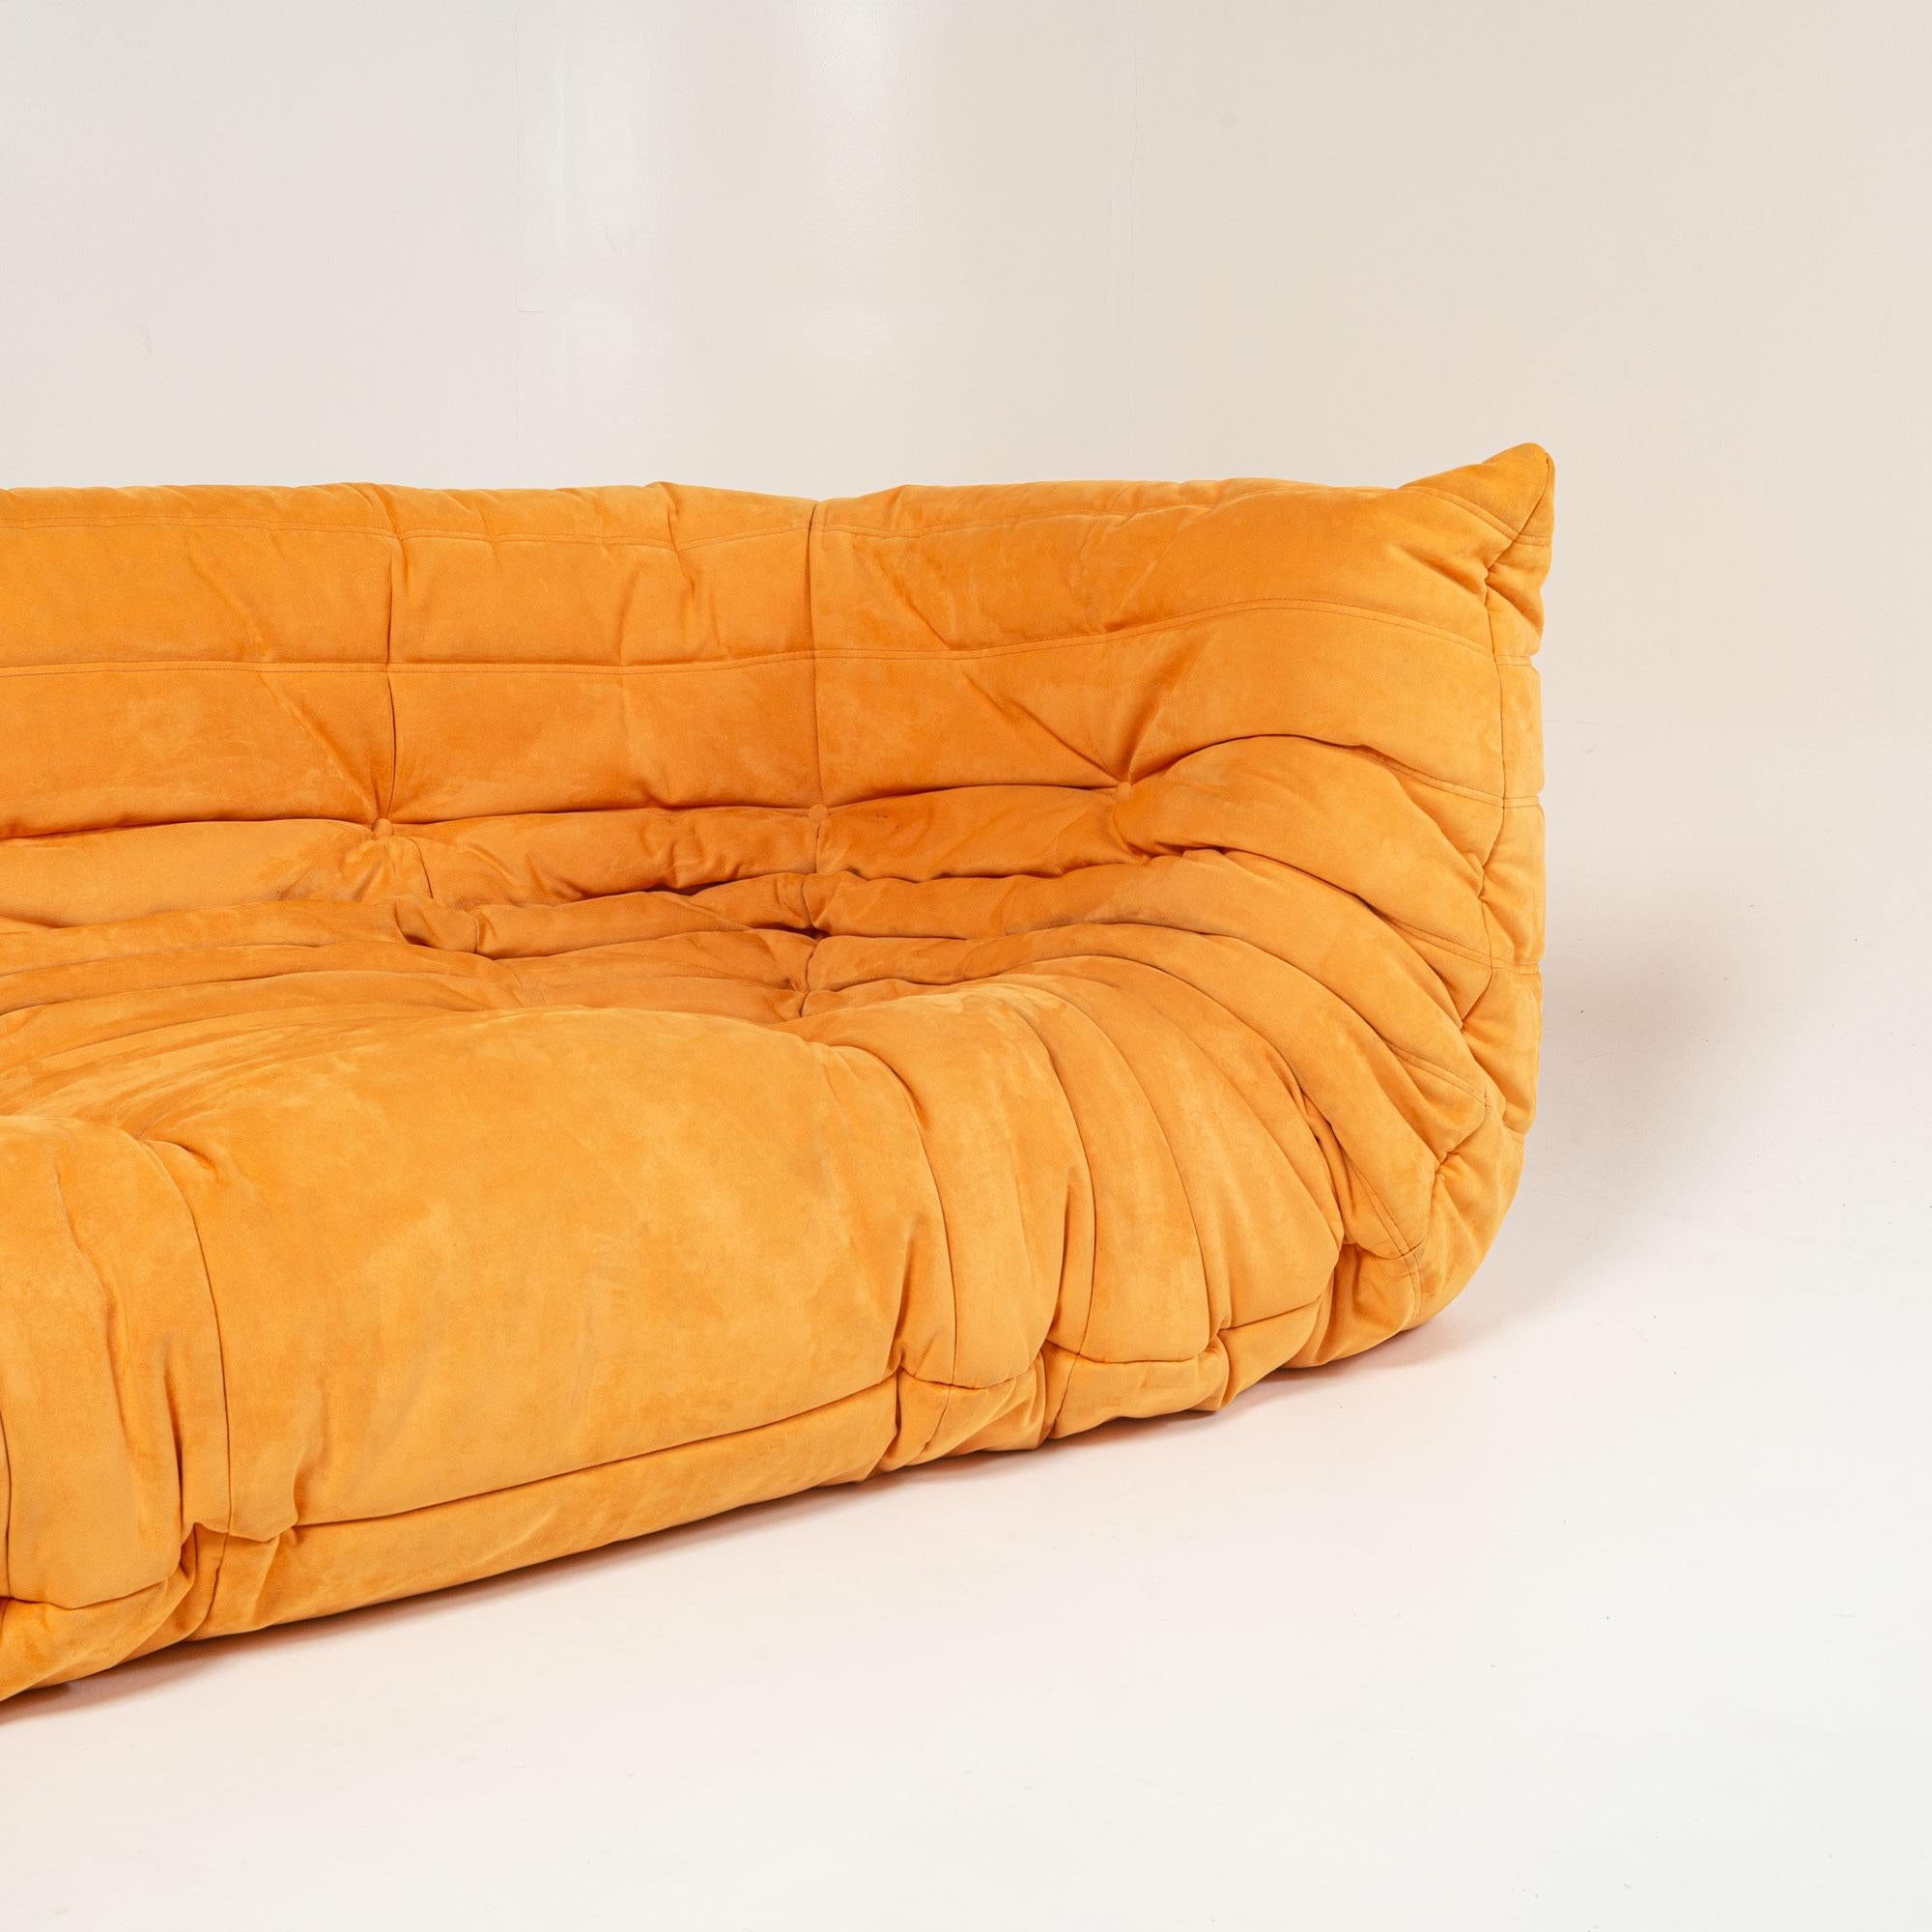 Organic Modern Michel Ducaroy's Togo Sofa with Arms in Curry Alcantara